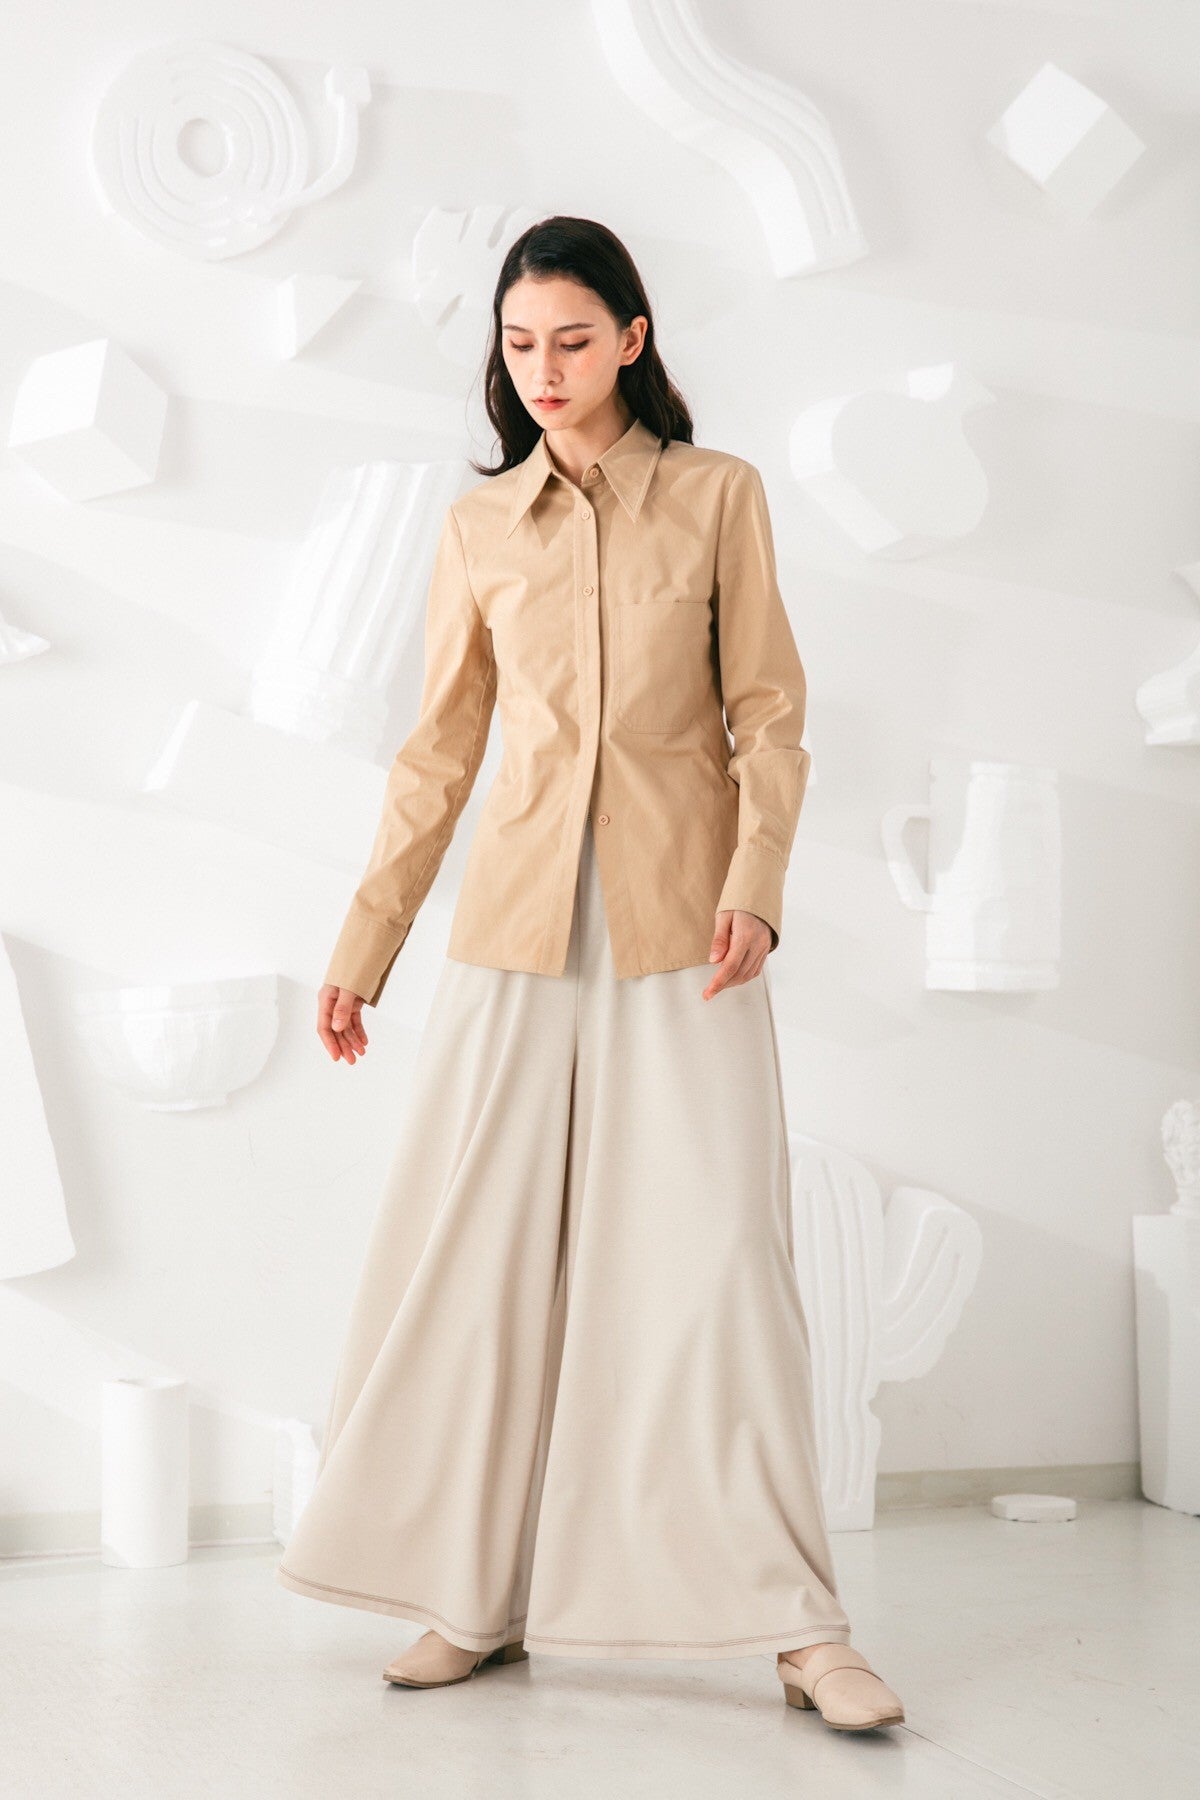 SKYE San Francisco SF shop ethical sustainable modern minimalist quality women clothing fashion Stéphane Pants beige 3